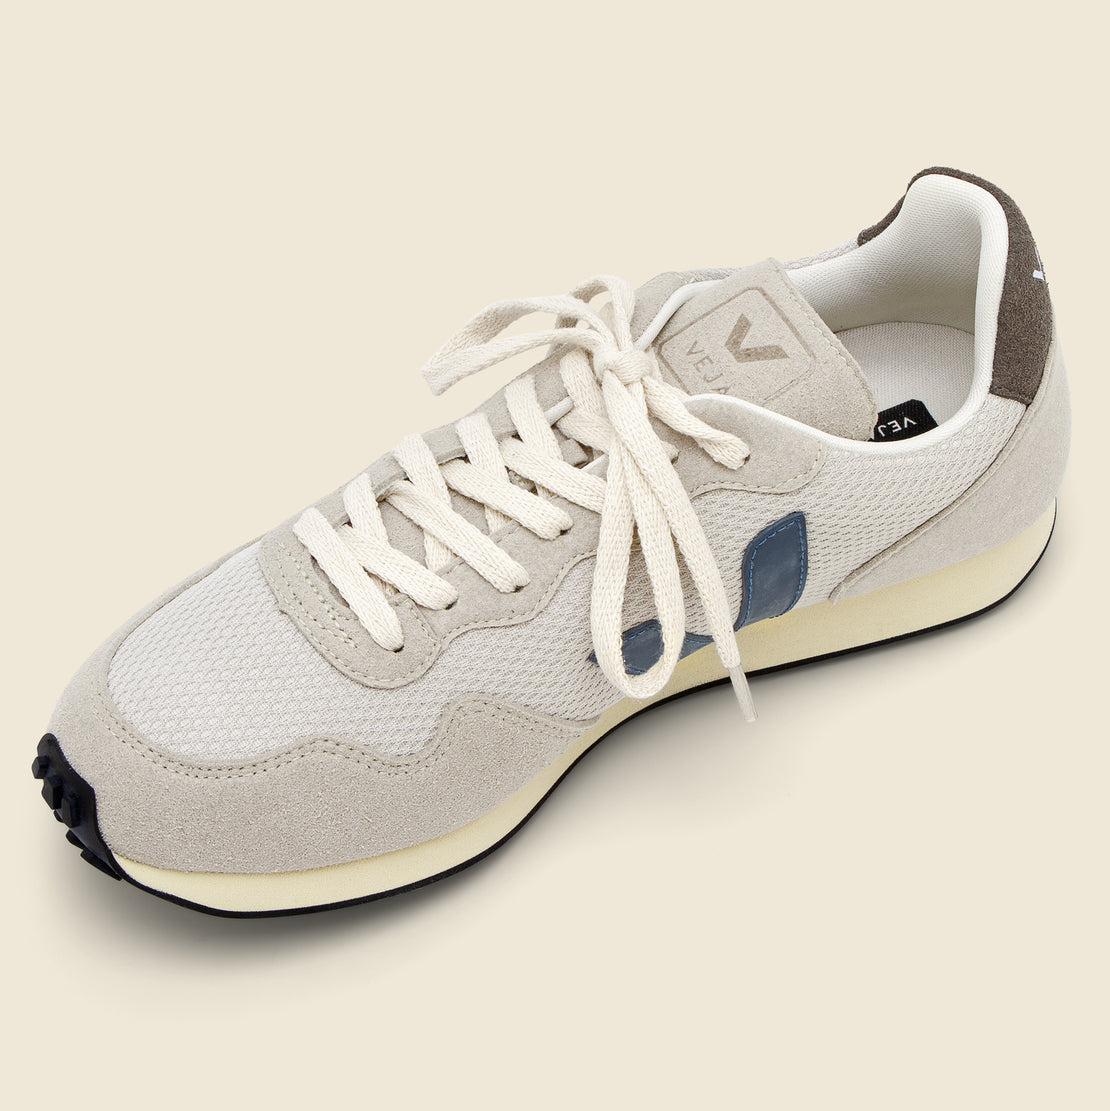 Rio Branco Alveomesh Sneaker - Natural California - Veja - STAG Provisions - Shoes - Athletic